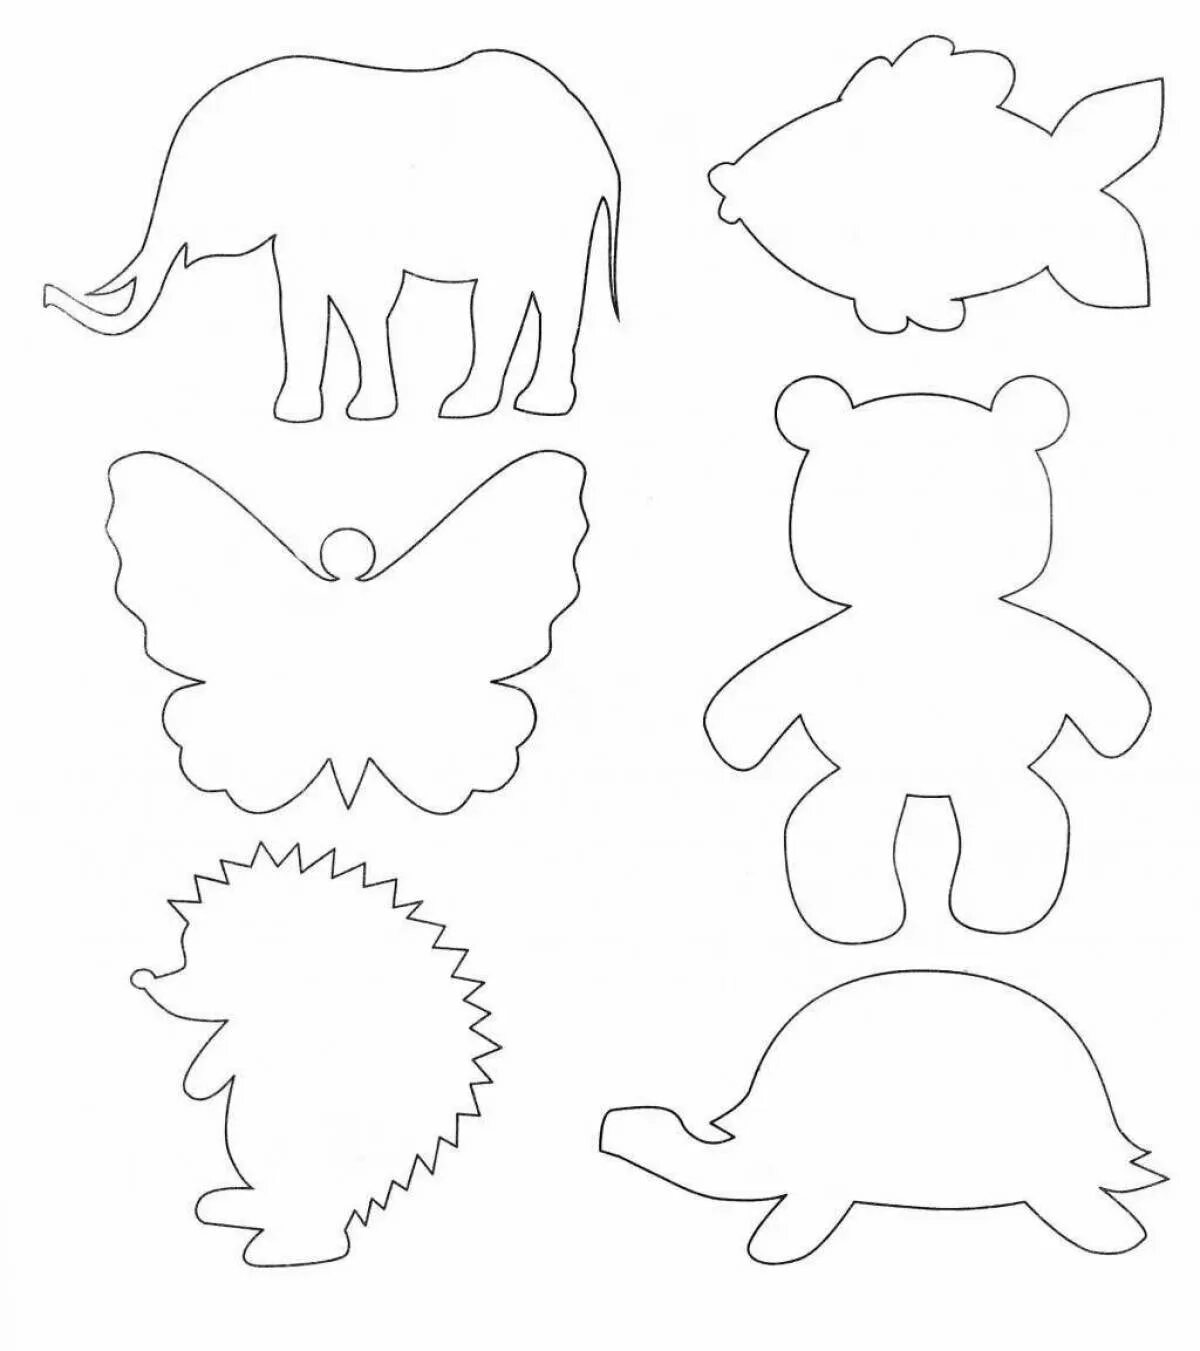 Контуры животных для детей. Контуры животных для вырезания. Шаблоны животных для рисования. Шаблоны для вырезания для дошкольников.